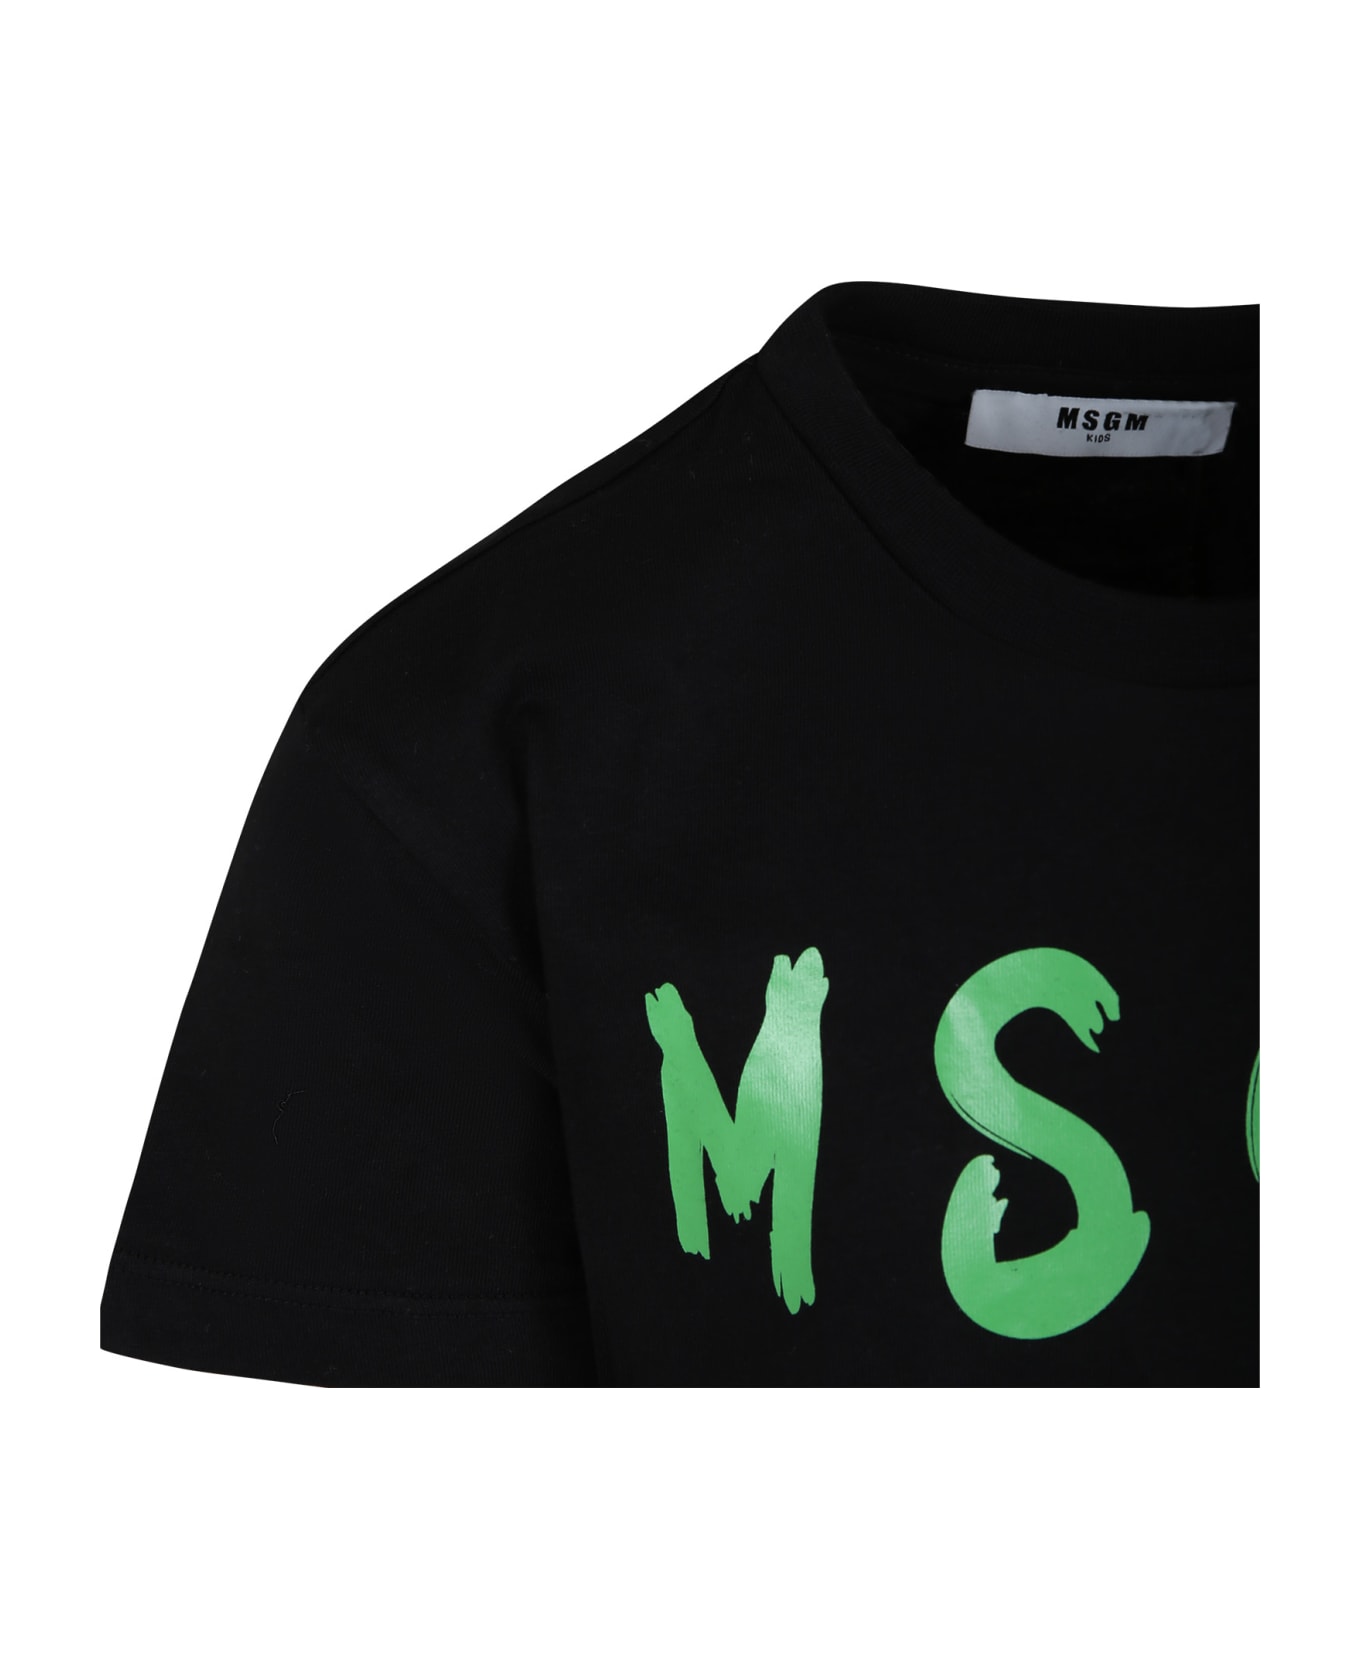 MSGM Black T-shirt For Kids With Logo - Nero